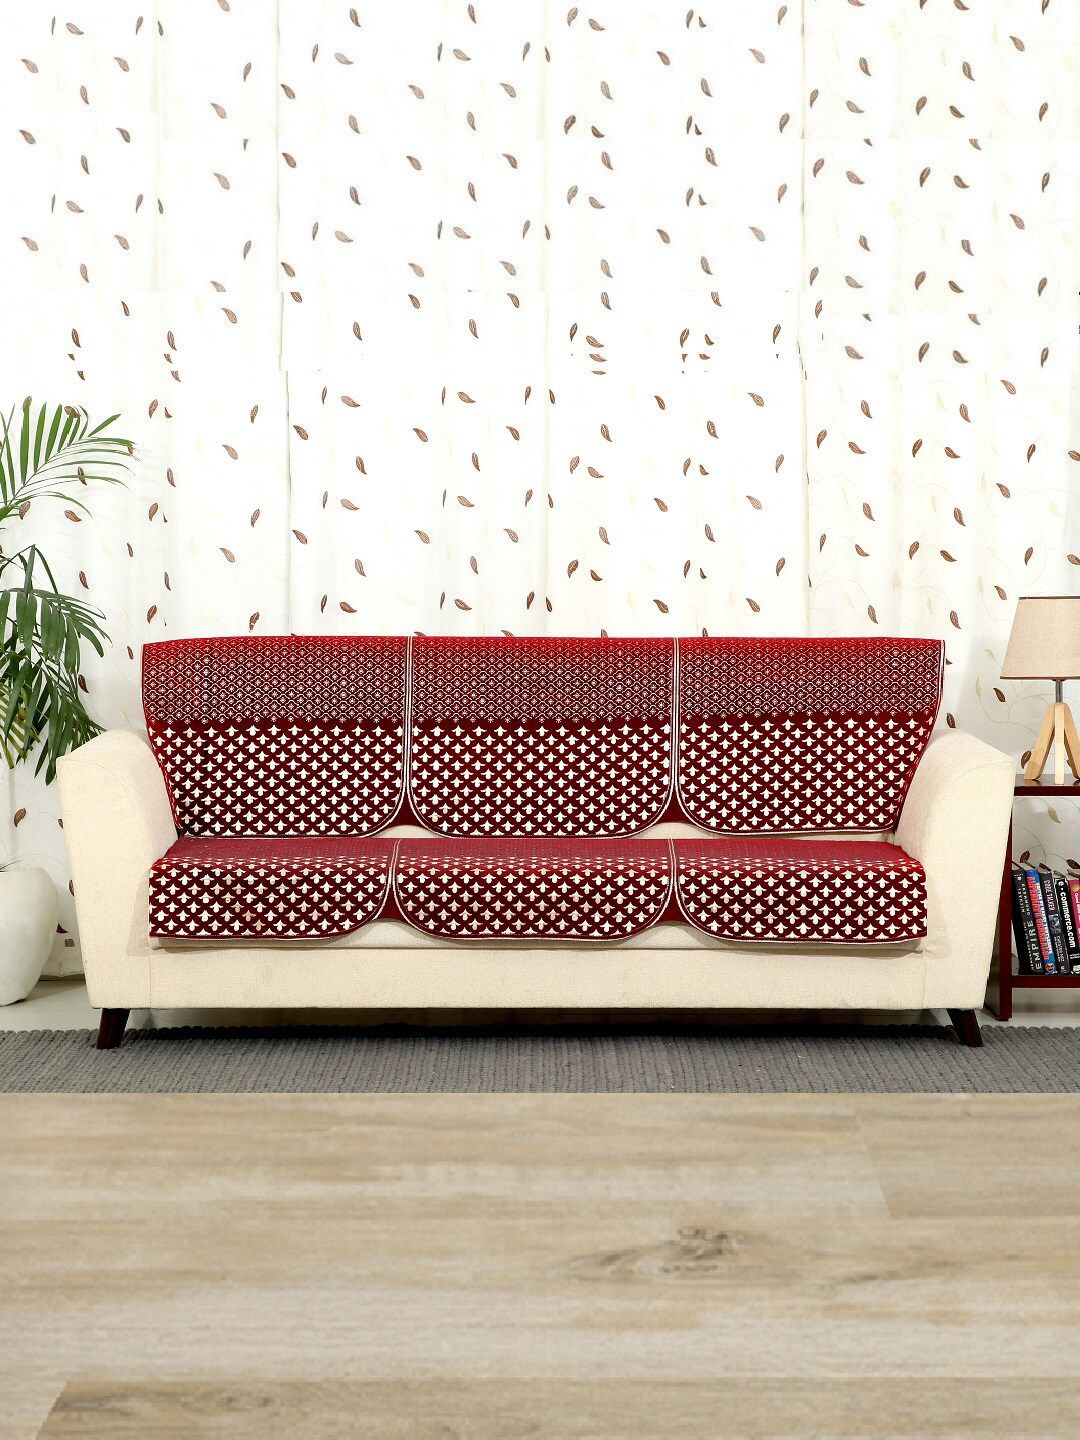 BELLA TRUE Set of 6 Maroon & Beige Printed 5 Seaters Sofa Cover Price in India